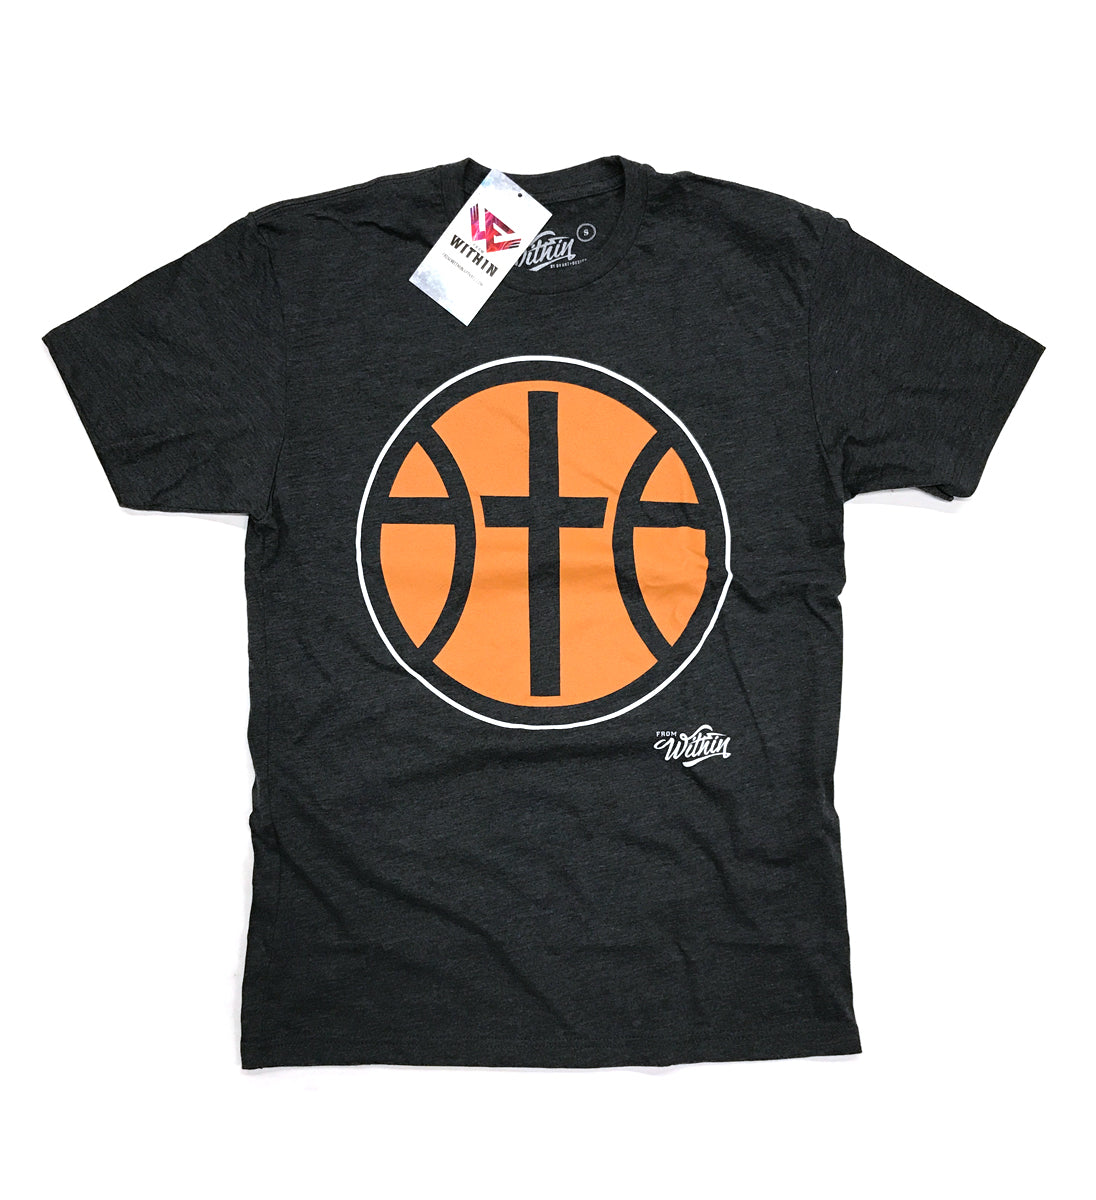 From Within - Faith, Family, Basketball Logo T shirt